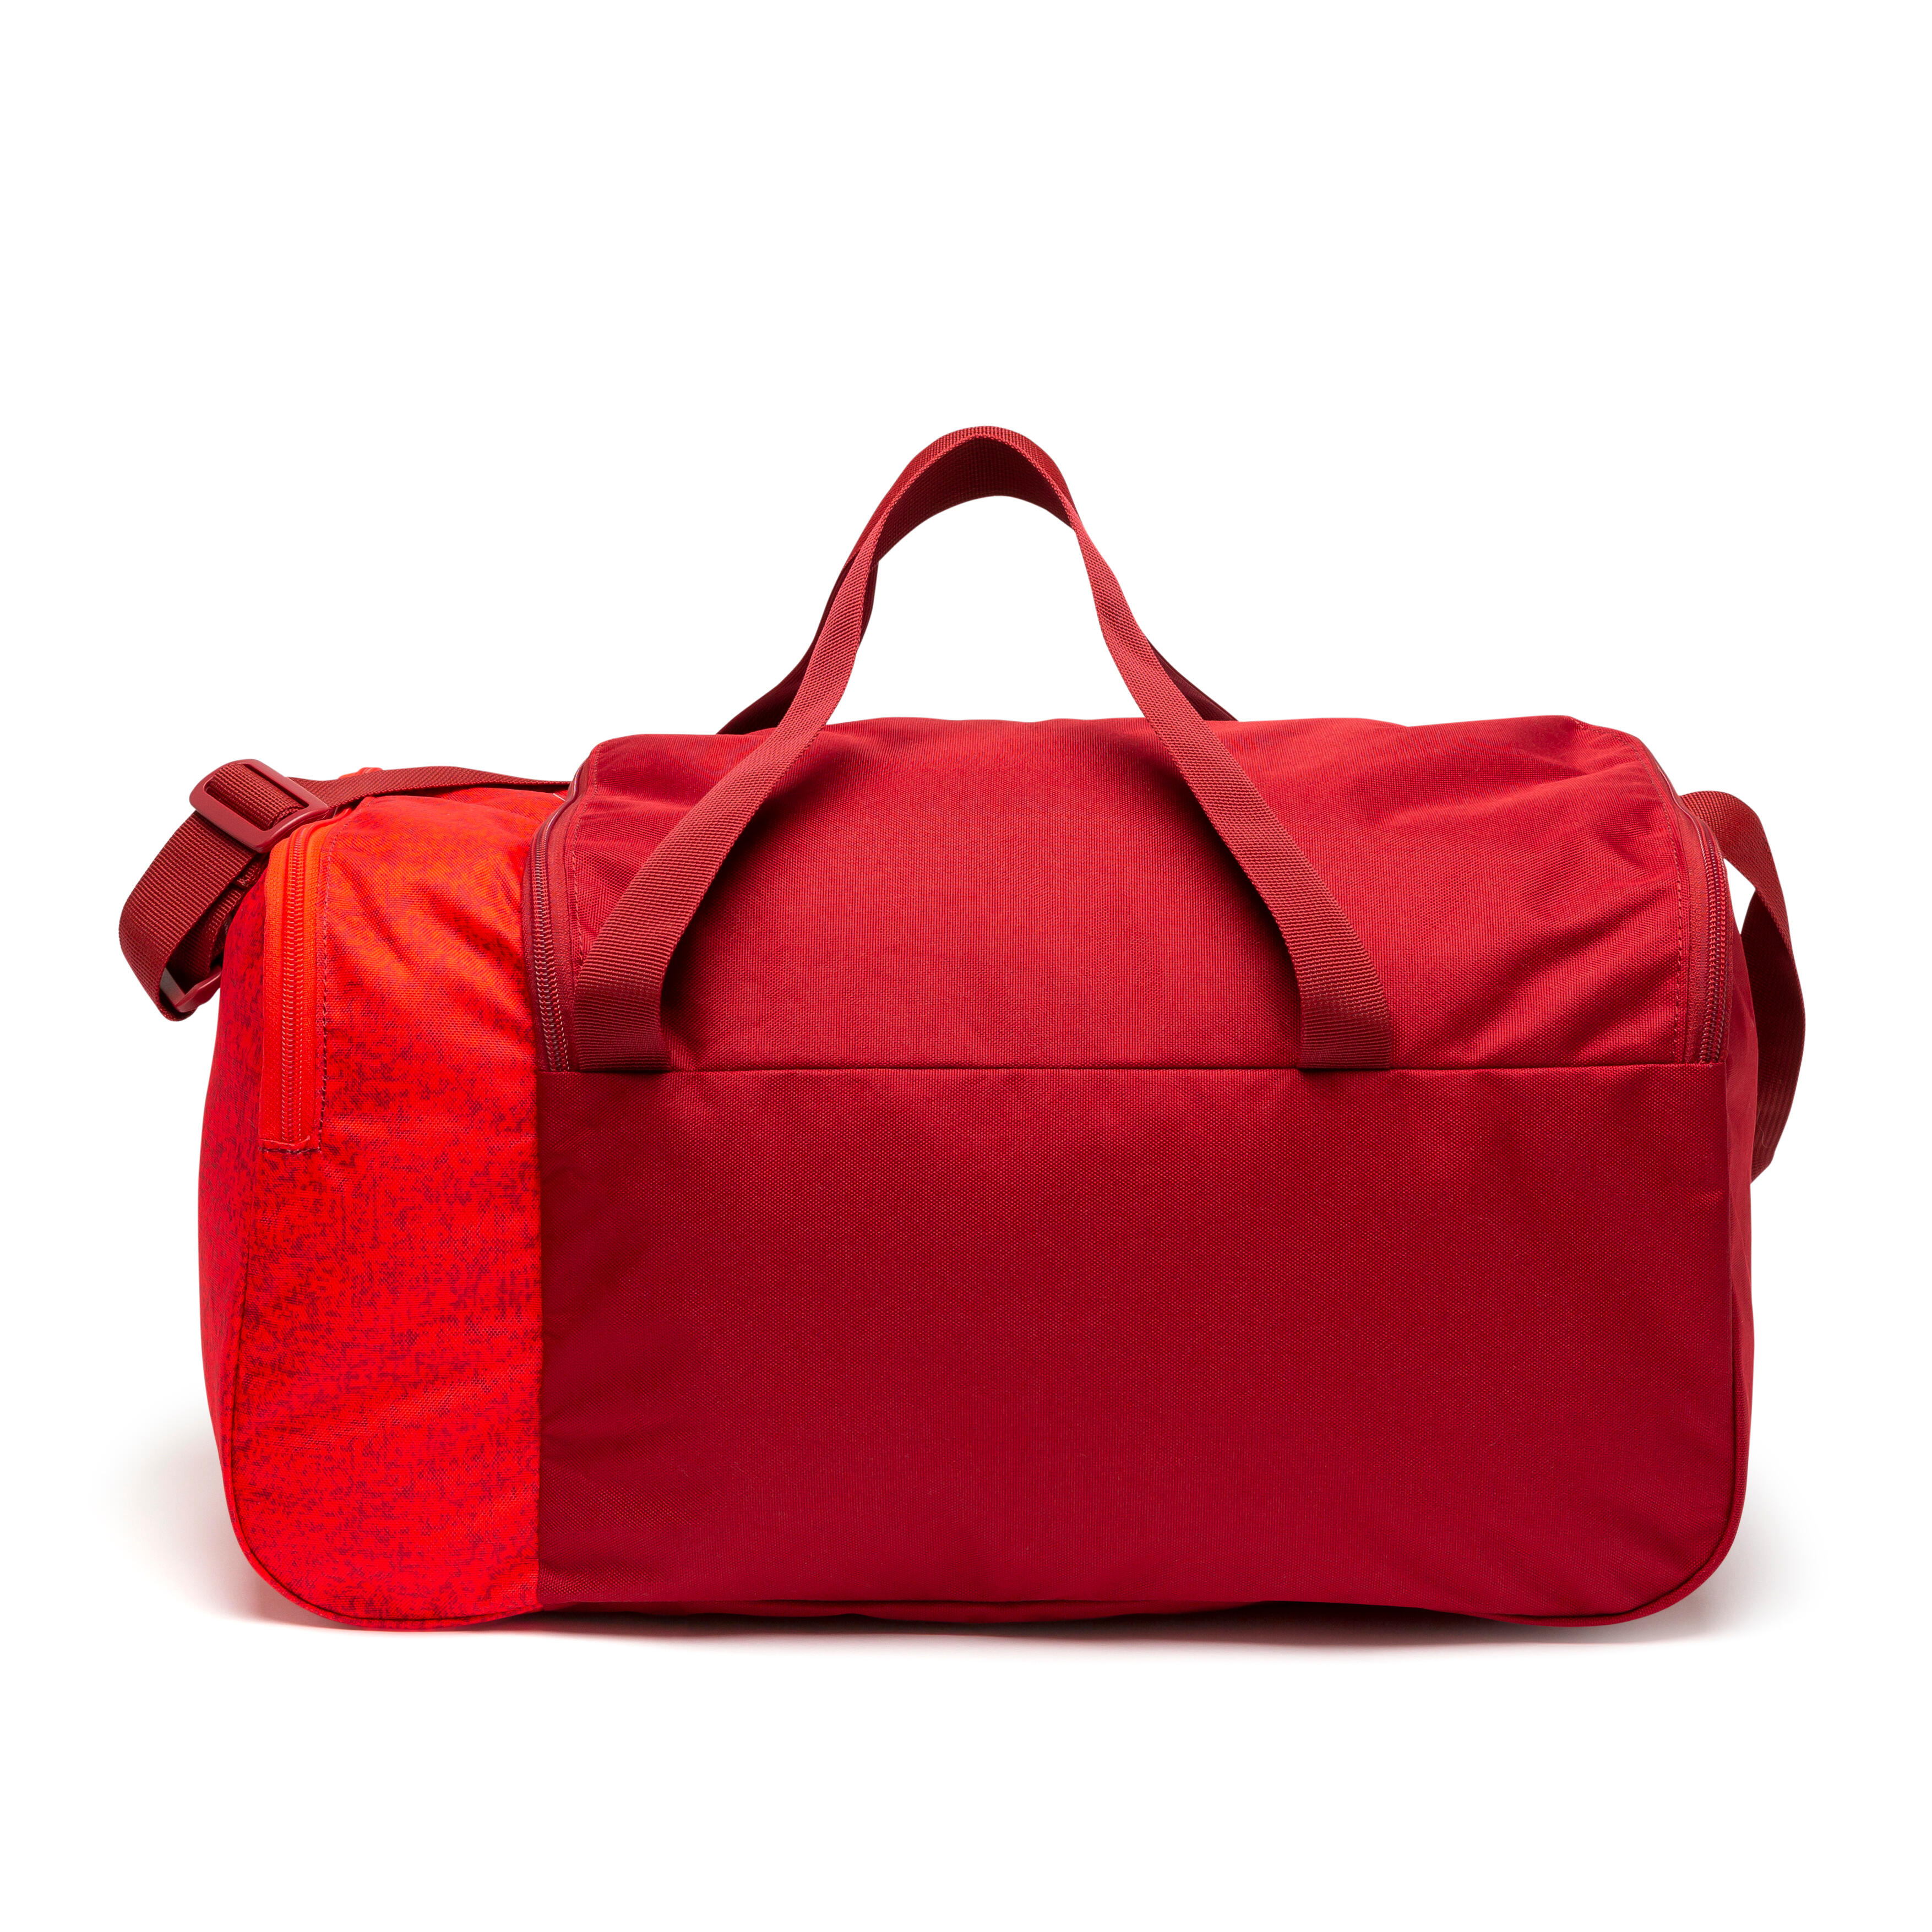 Soccer Bag - Essential 35 L Red - Bordeaux, Coral red - Kipsta - Decathlon